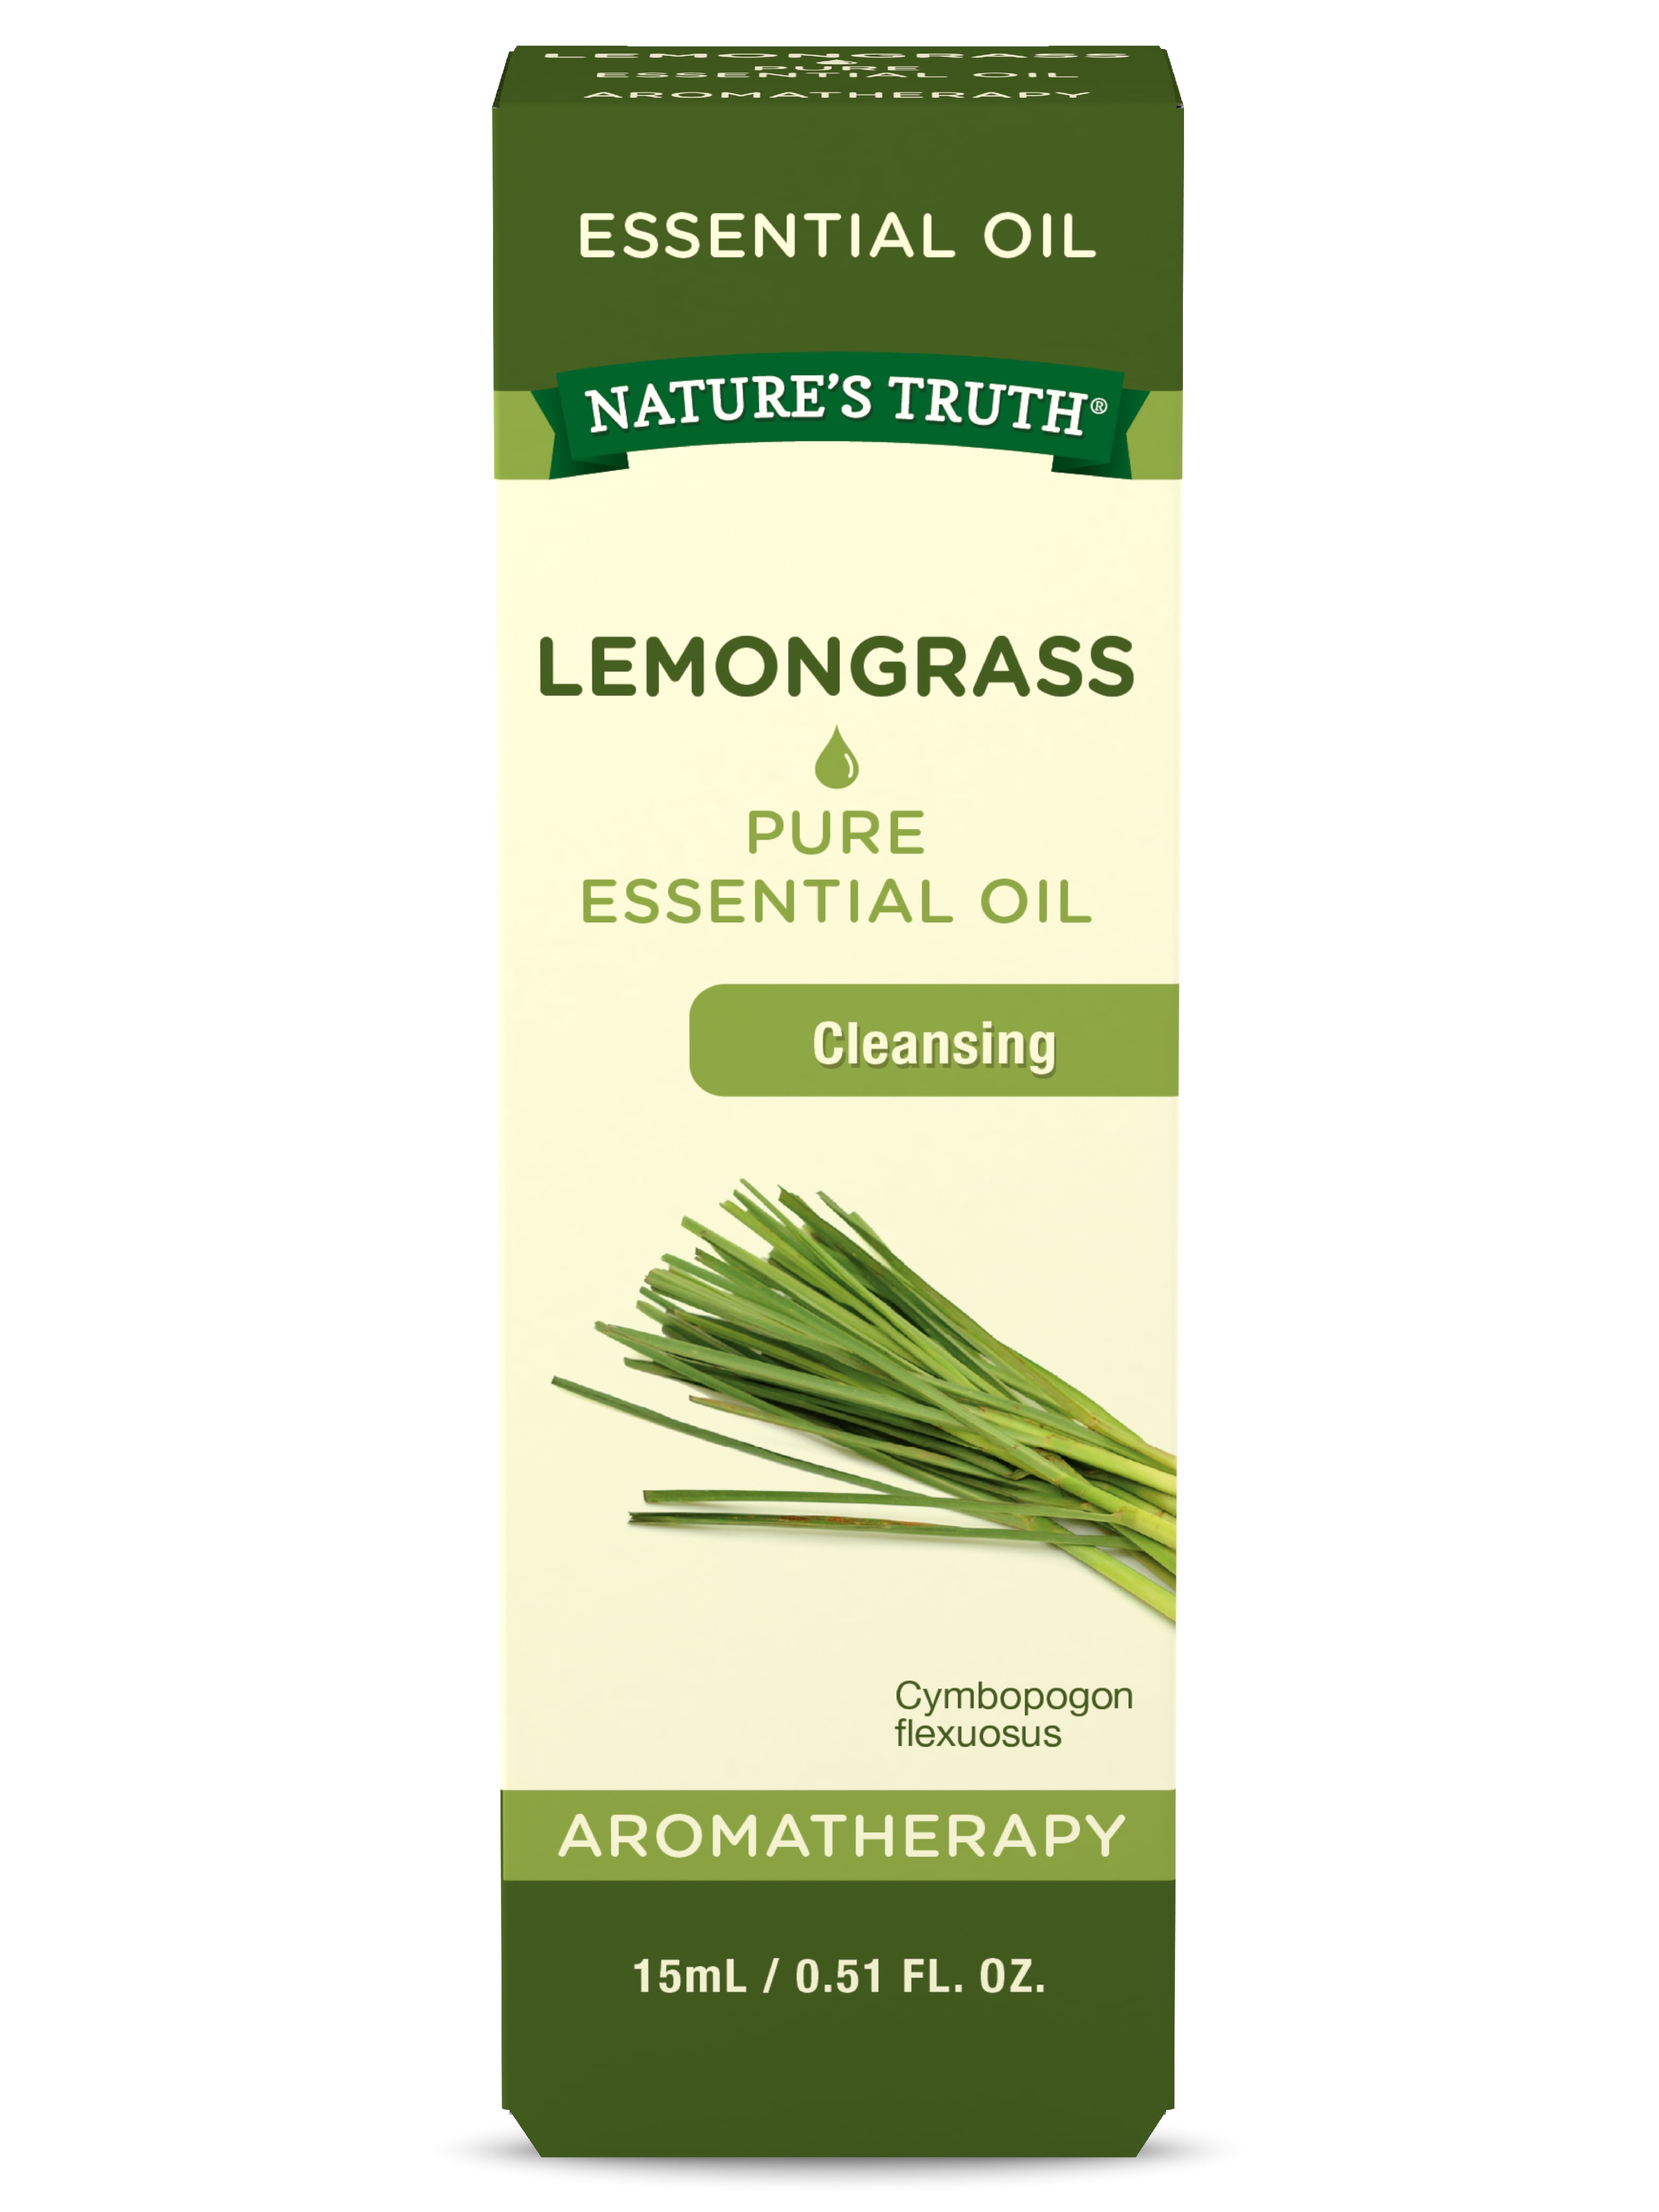 Zesty Citrus - LemonGrass Essential Oil – Puretive Botanics